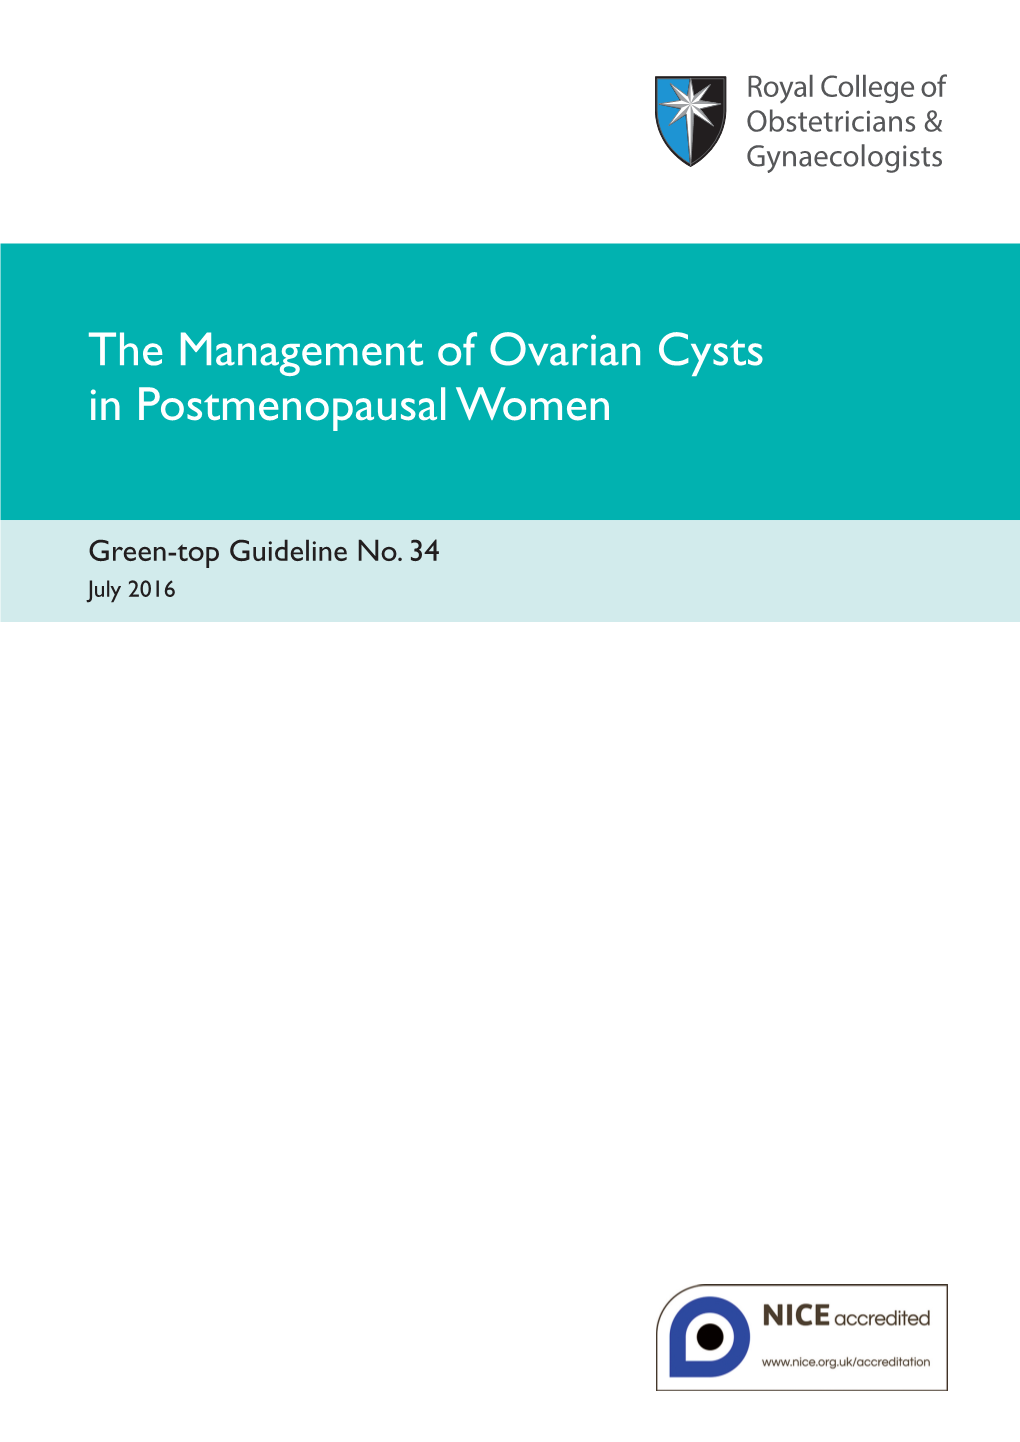 Ovarian Cysts in Postmenopausal Women